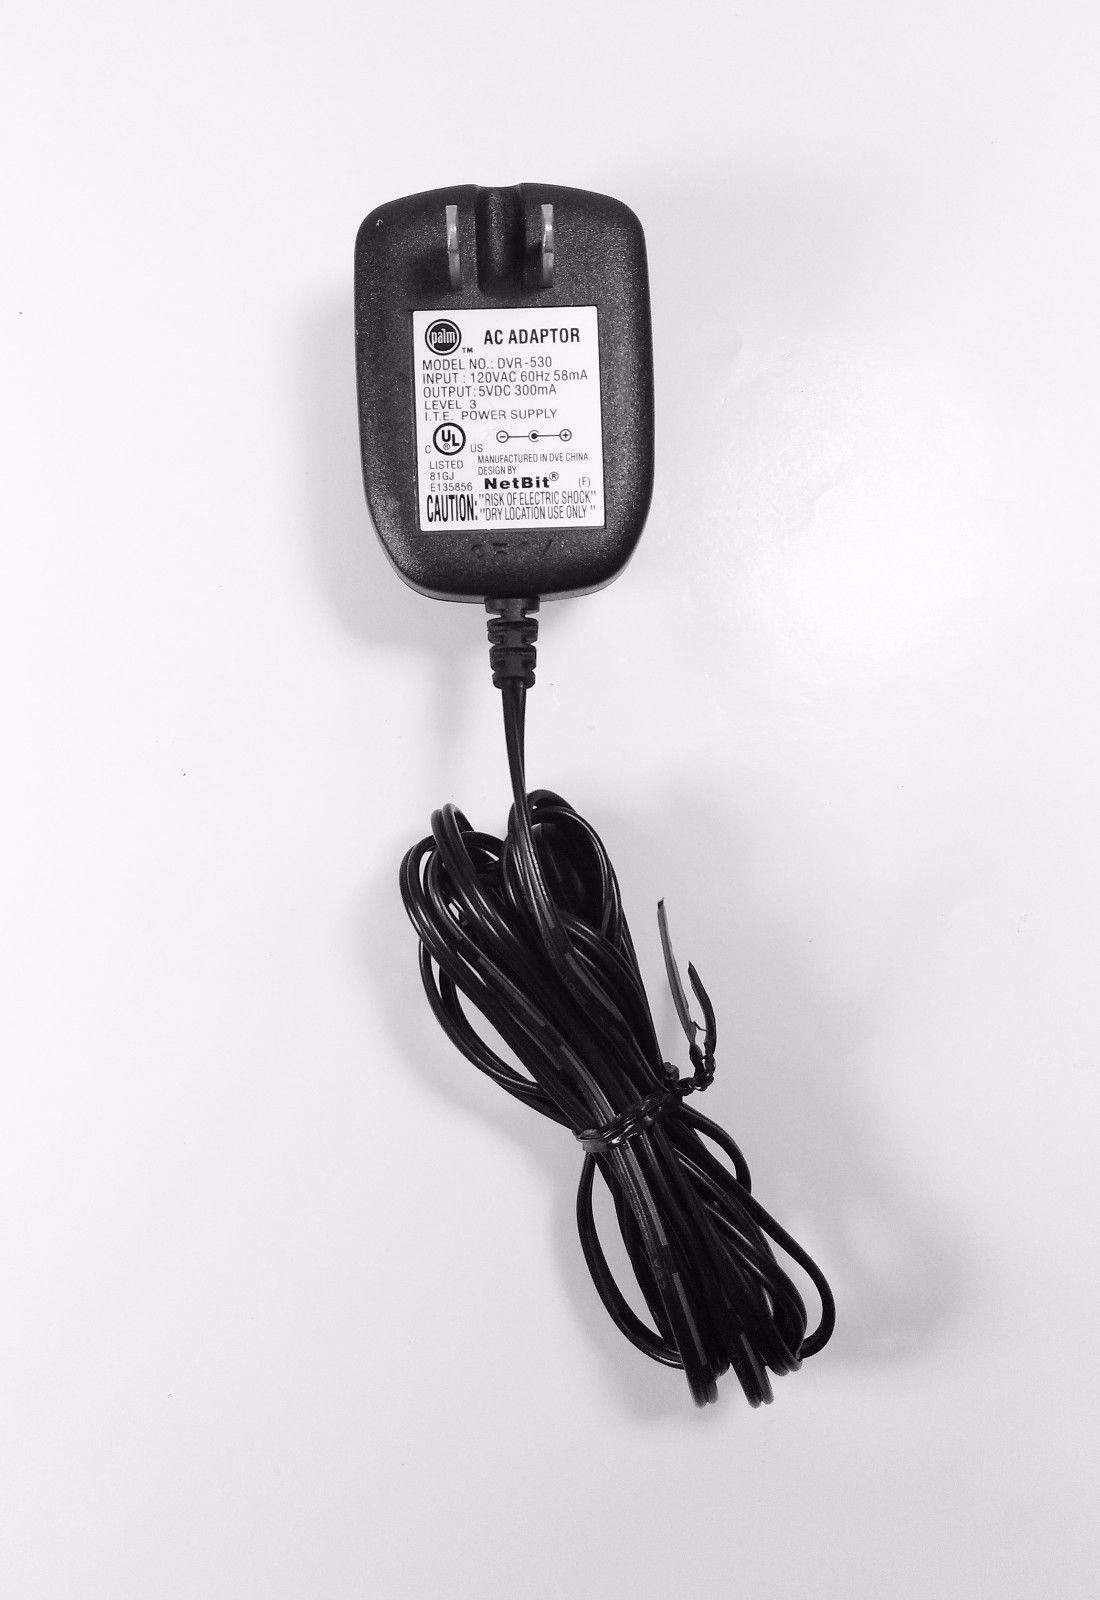 NEW 5V 300mA Palm DVR-530 AC Power Supply Adapter